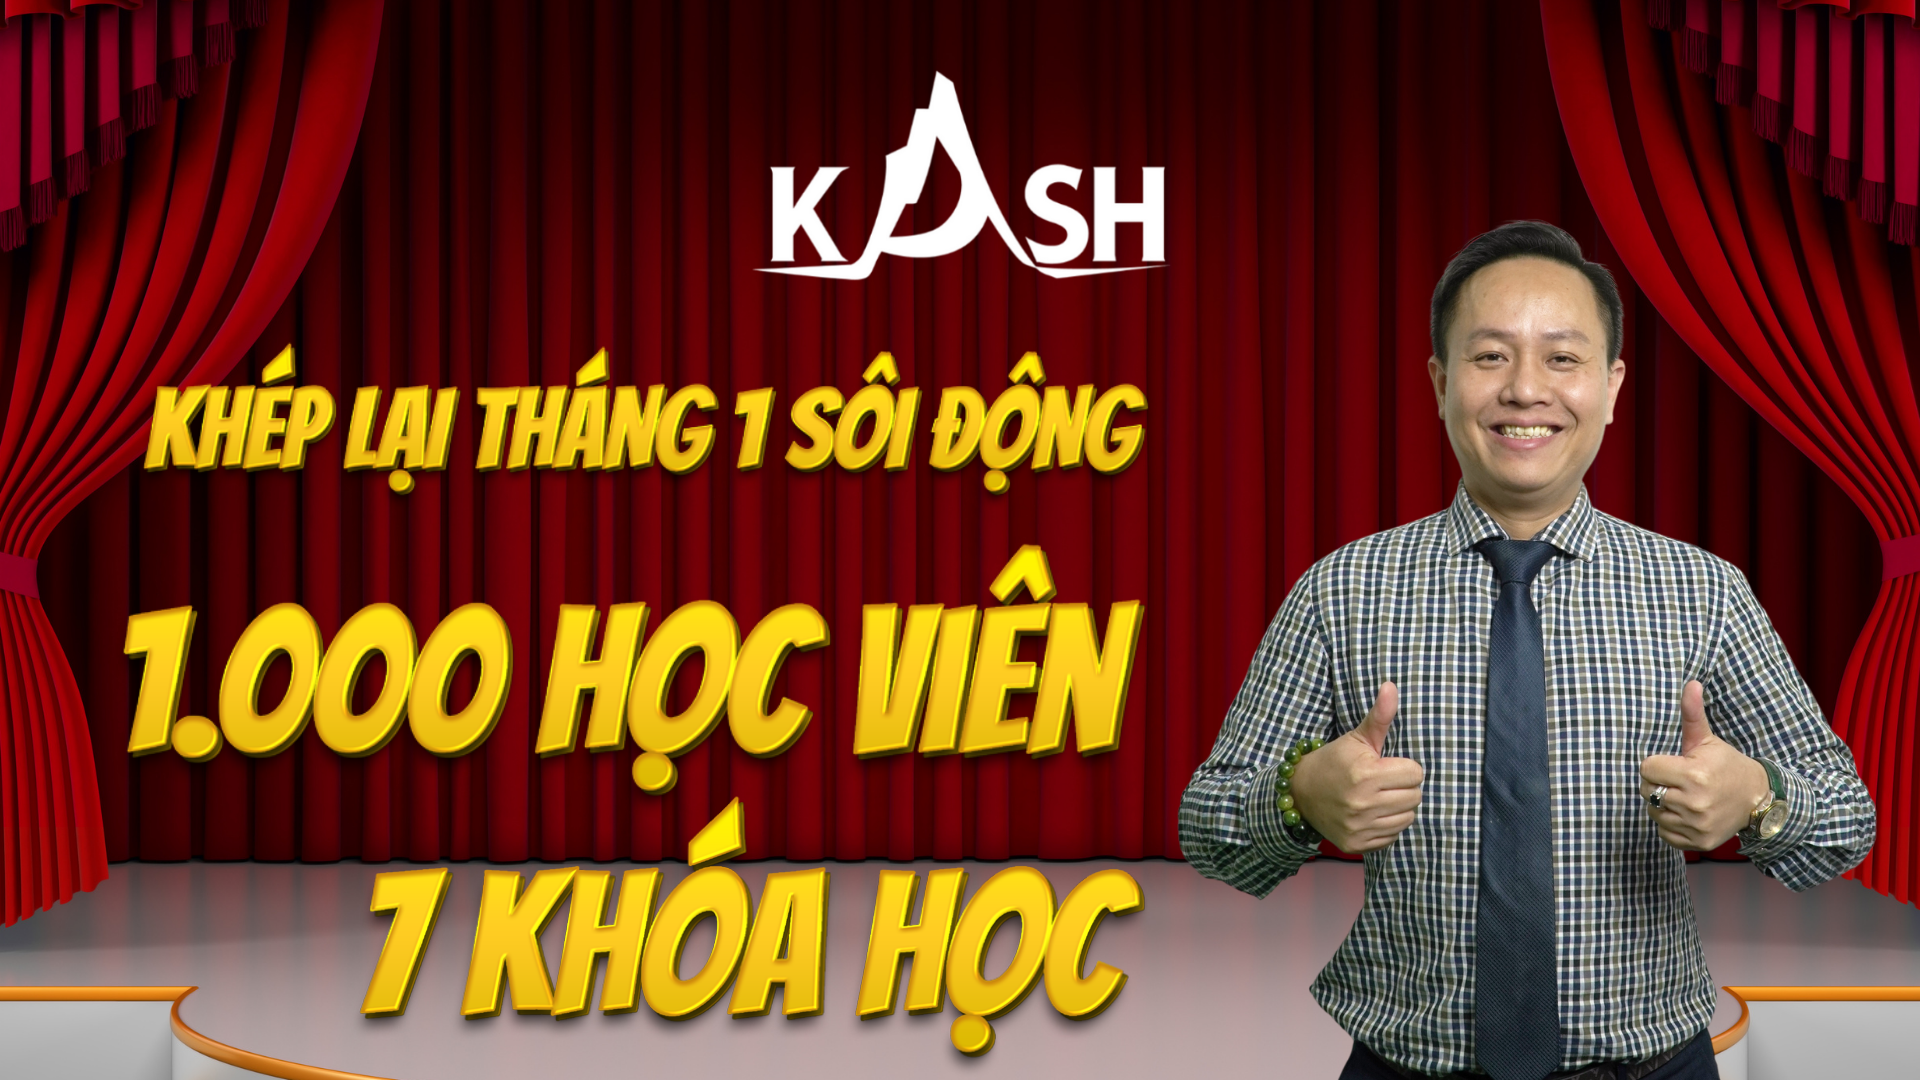 Kash Viet Nam Tong Ket Khoa Hoc Dao Tao Bao Hiem Thang 1/2022